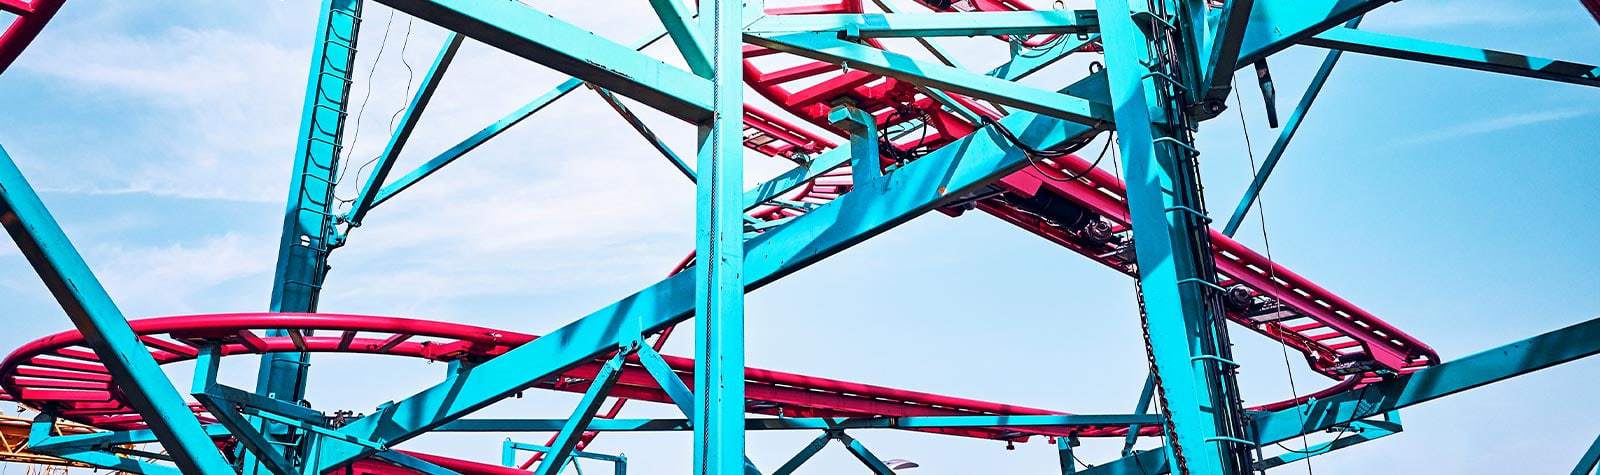 Amusement rides made to thrill – recent developments in roller coaster design